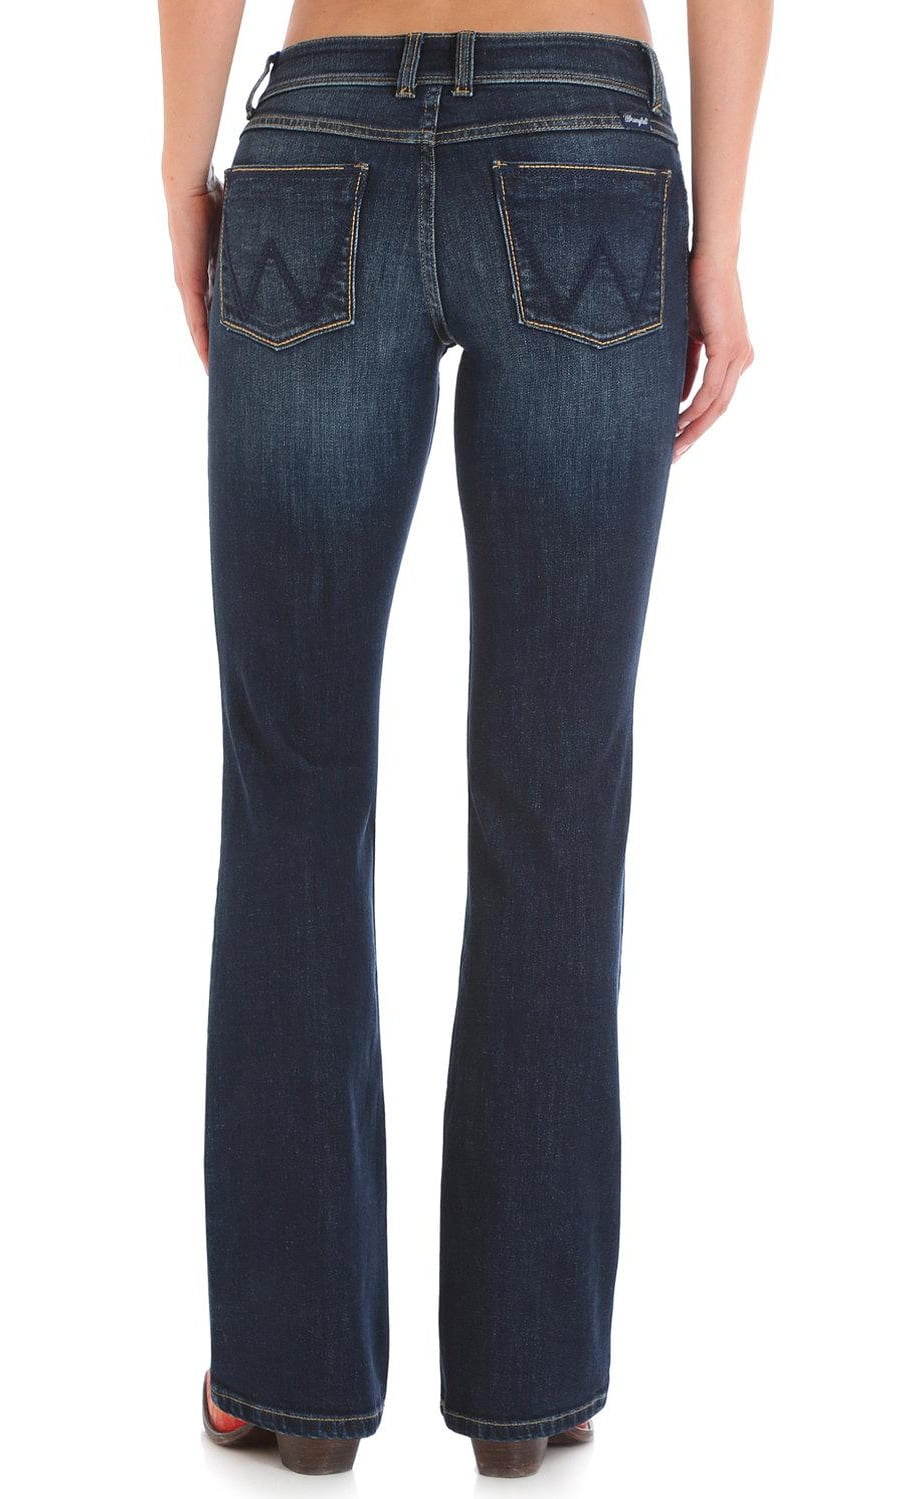 wrangler low rise jeans